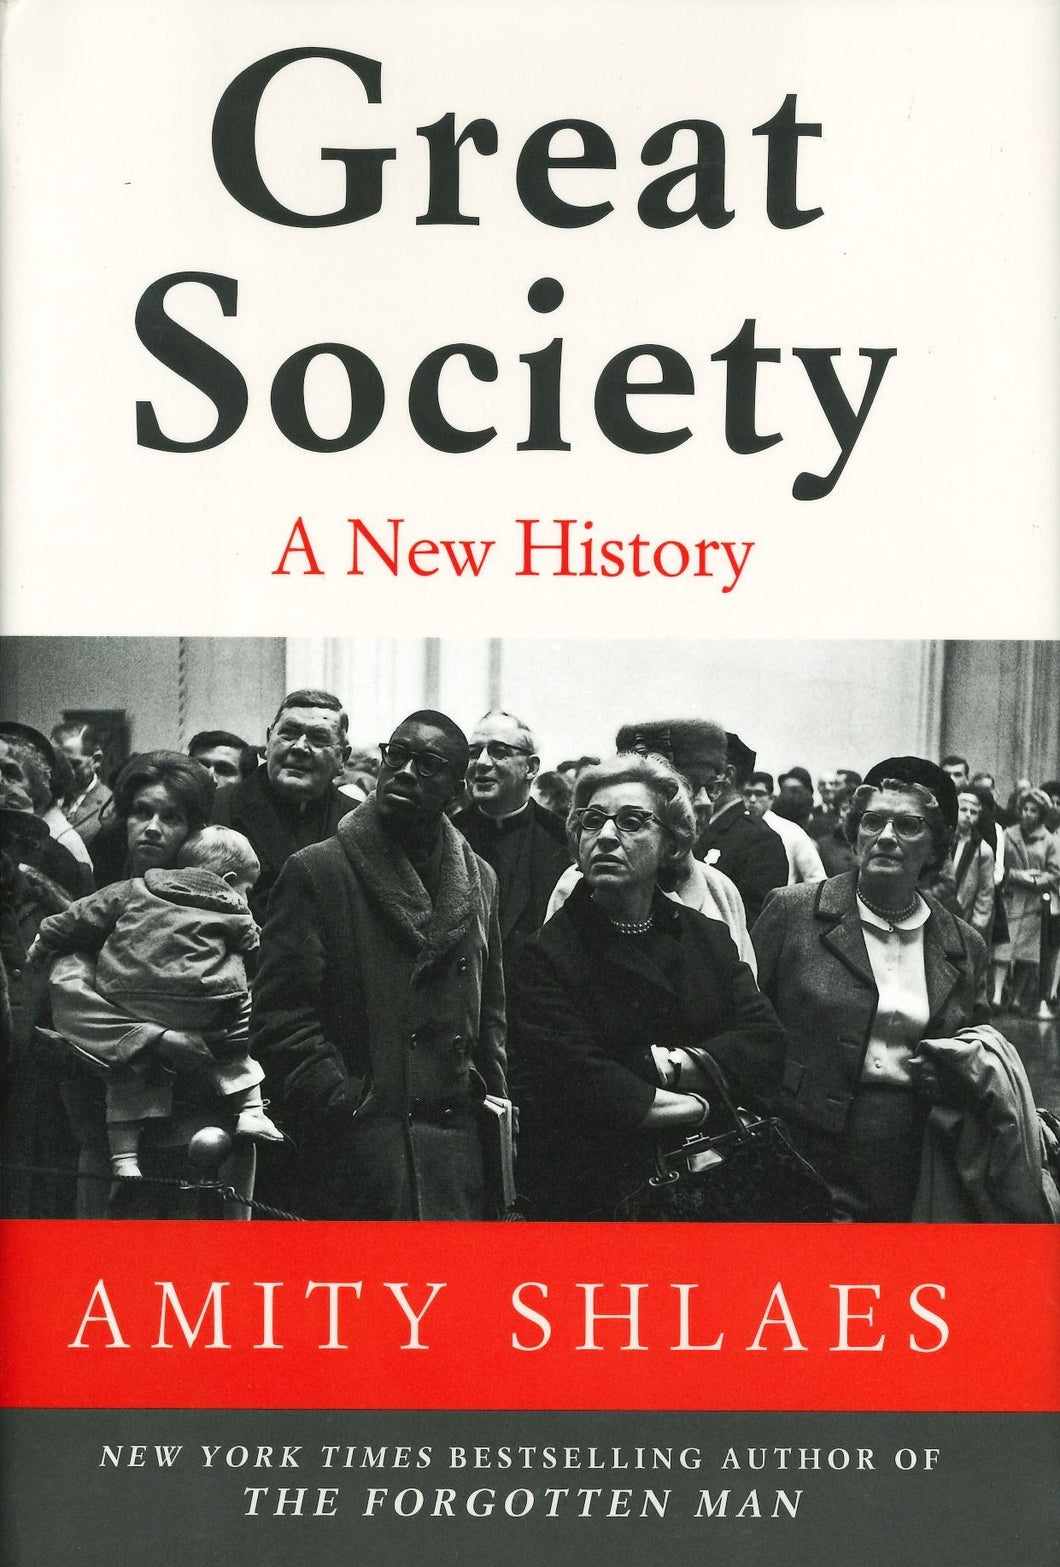 Great Society by Amity Shlaes